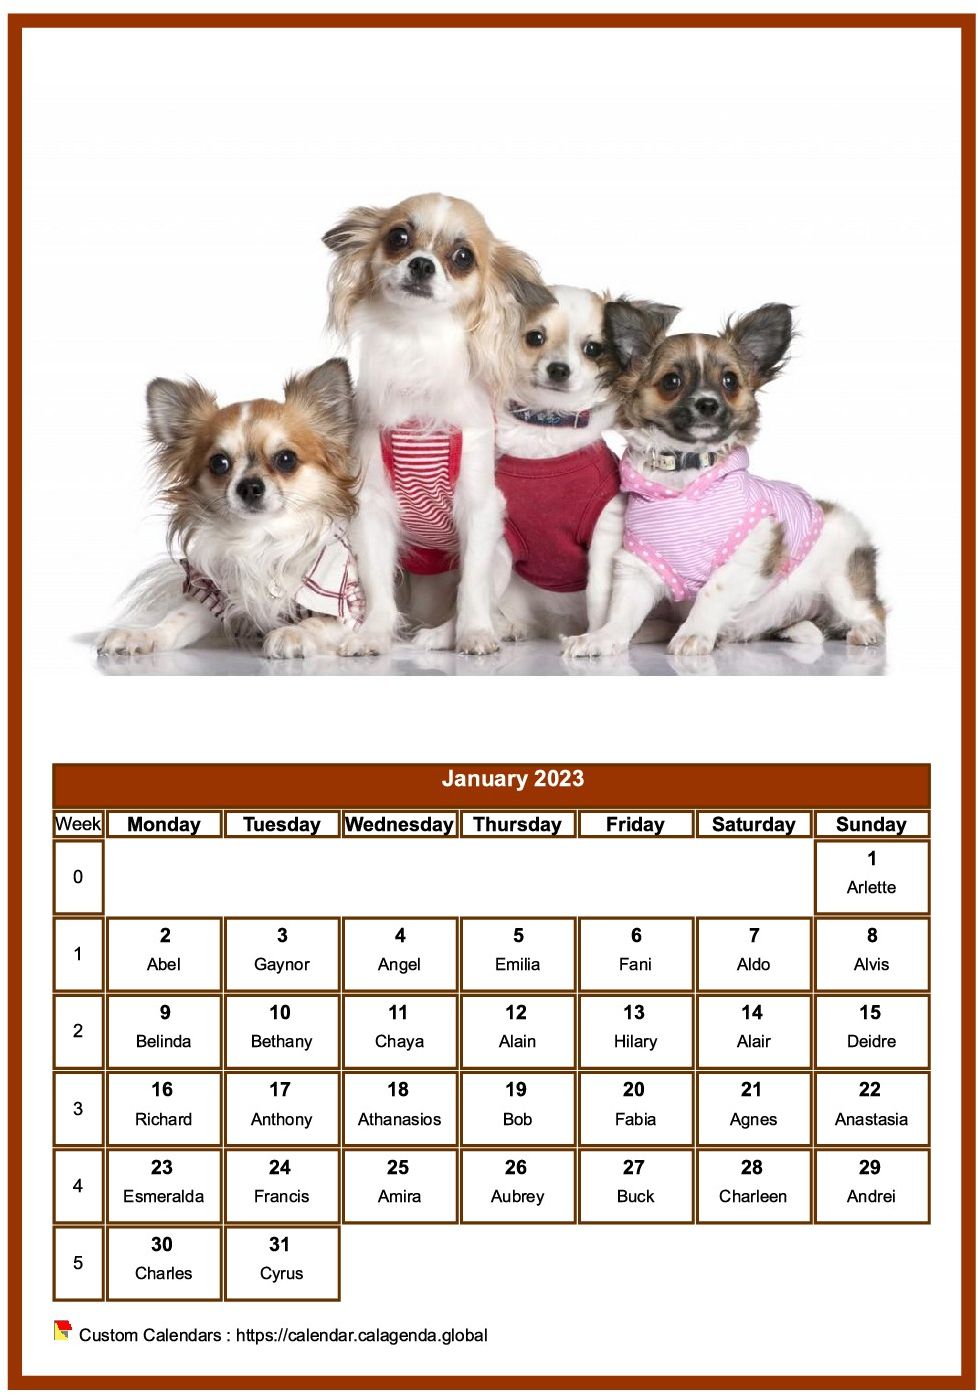 calendar-january-2023-dogs